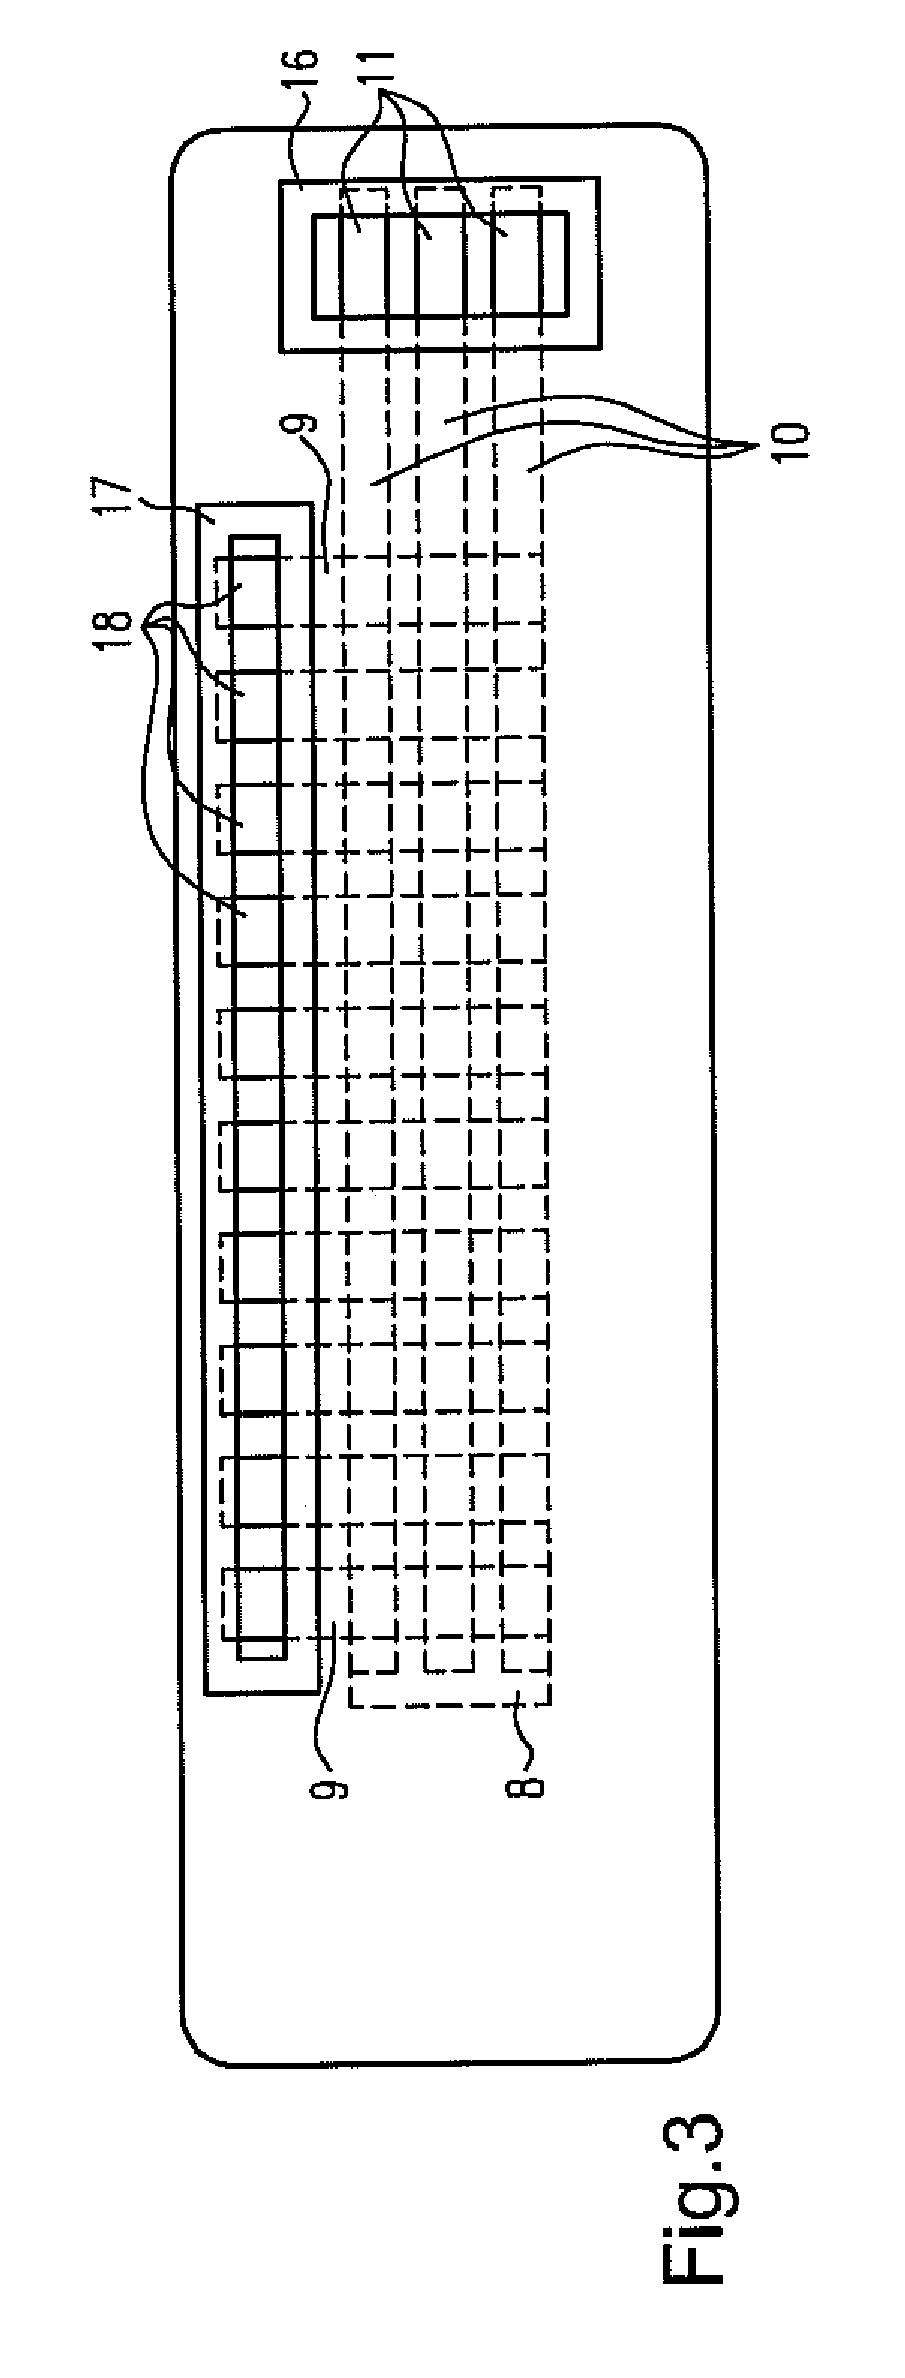 Evaporator, artificial respiration apparatus and evaporation process